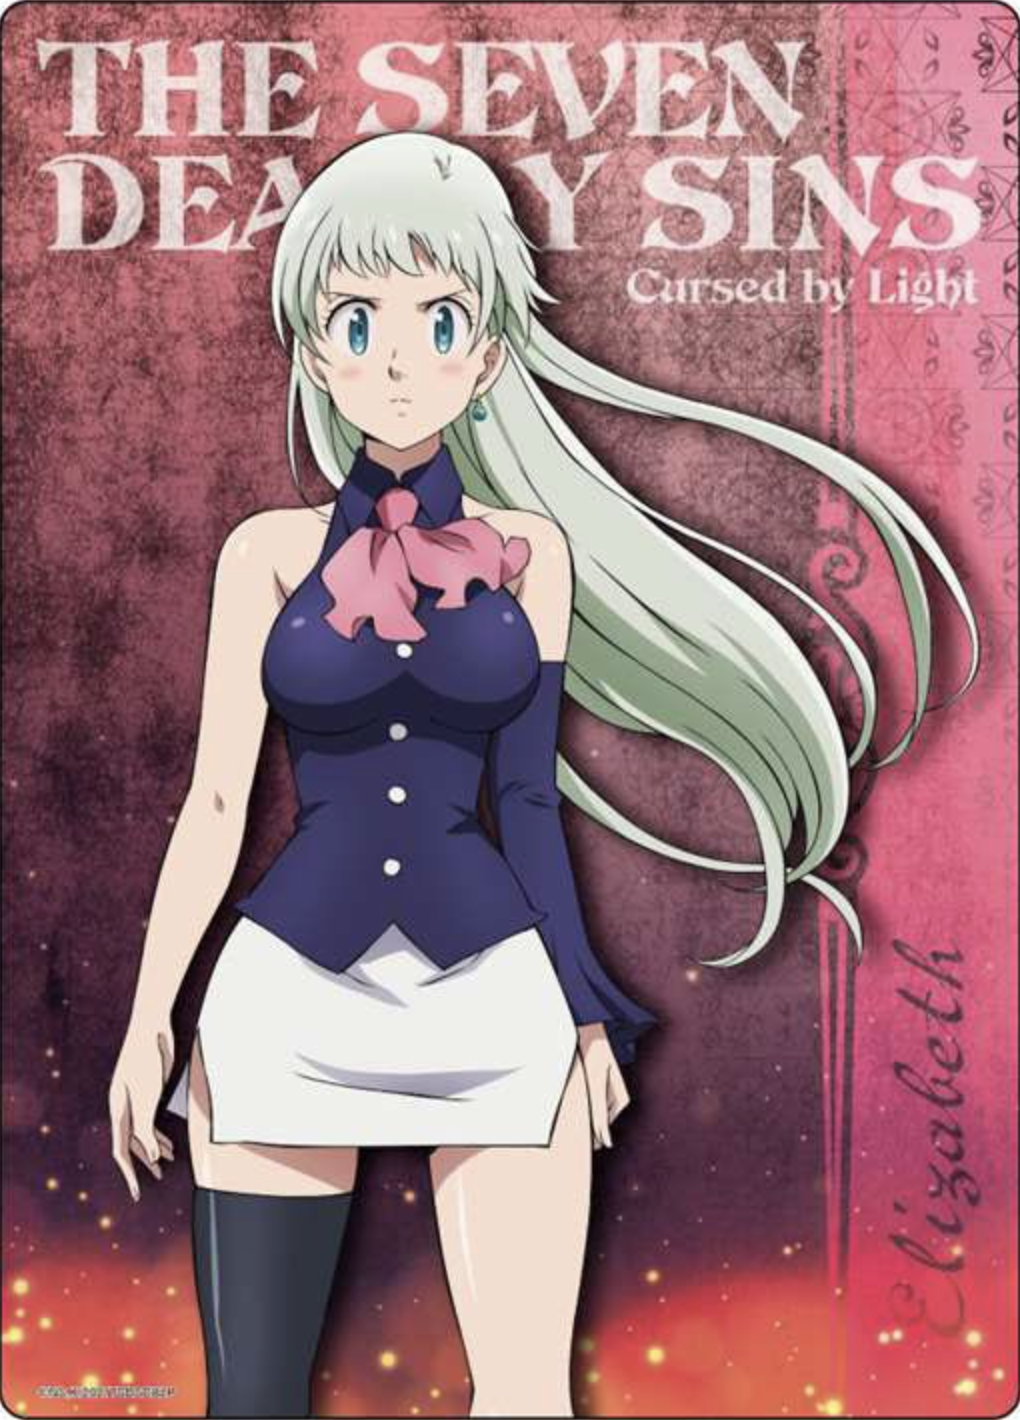 The Seven Deadly Sins Anime Elizabeth